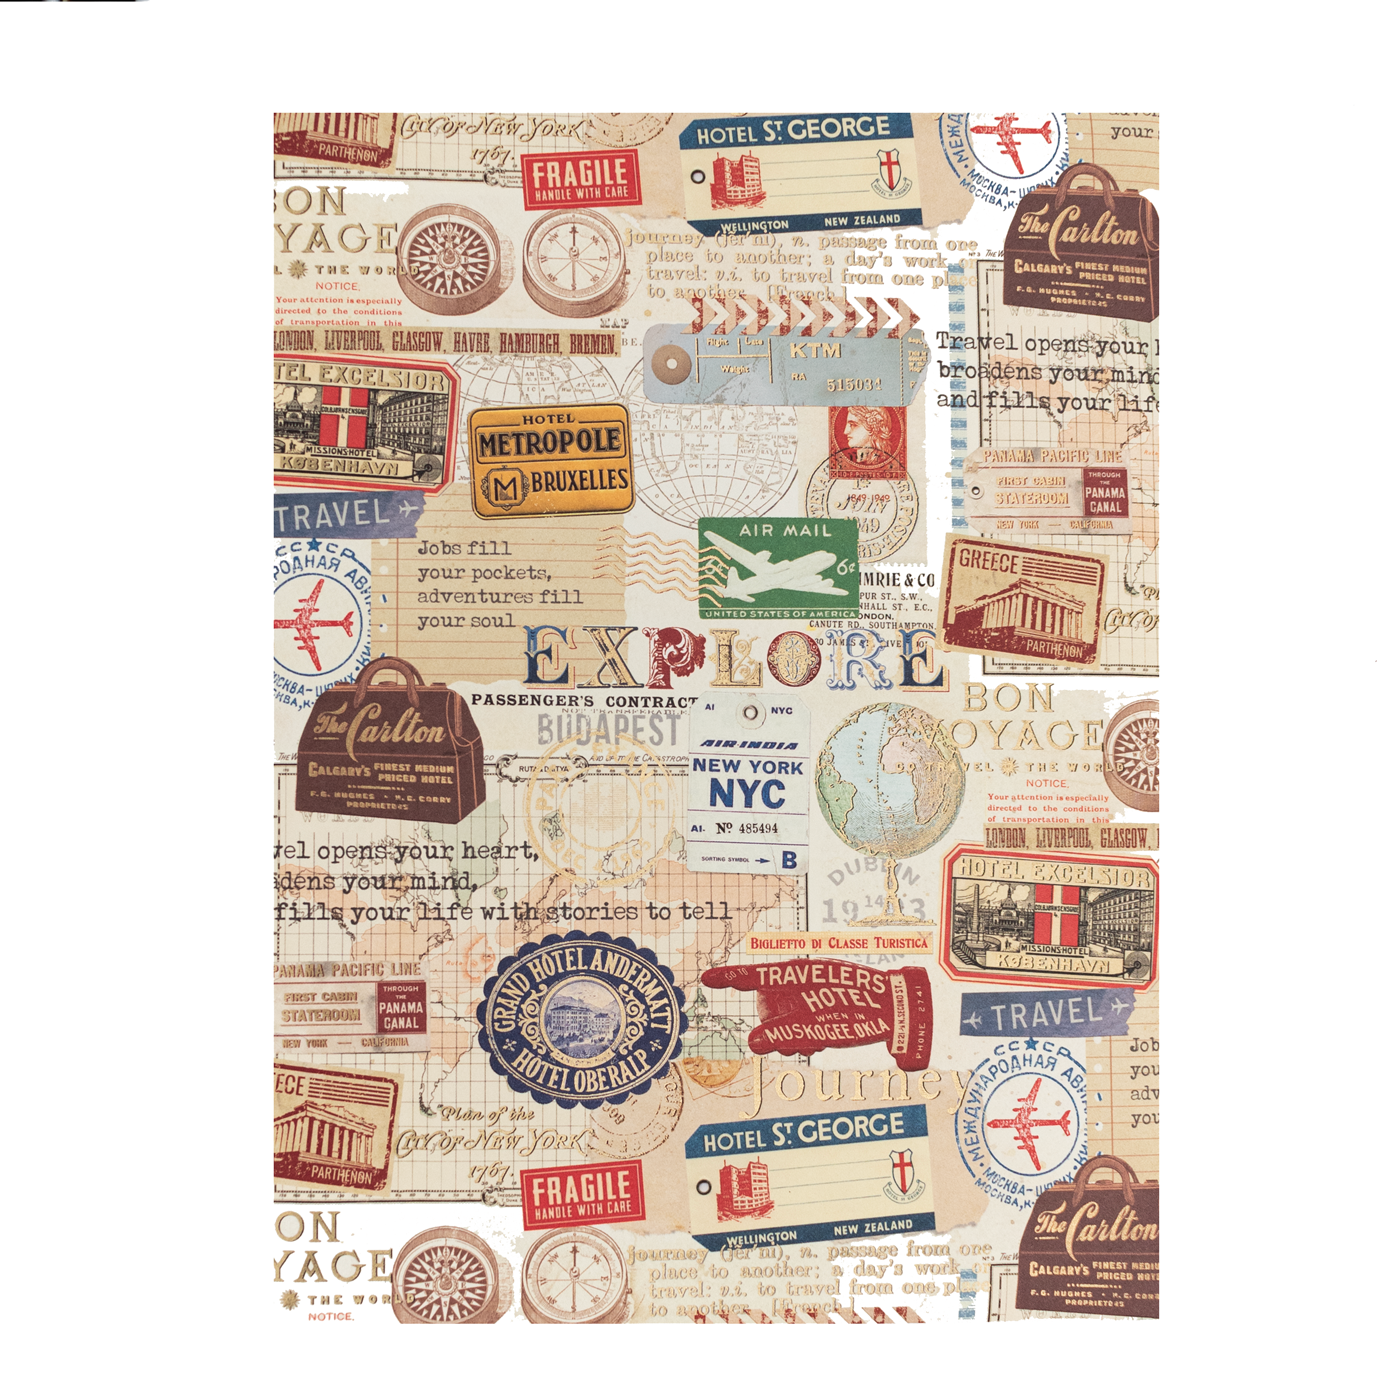 Midori Letter Set (923) Collage - Stationery